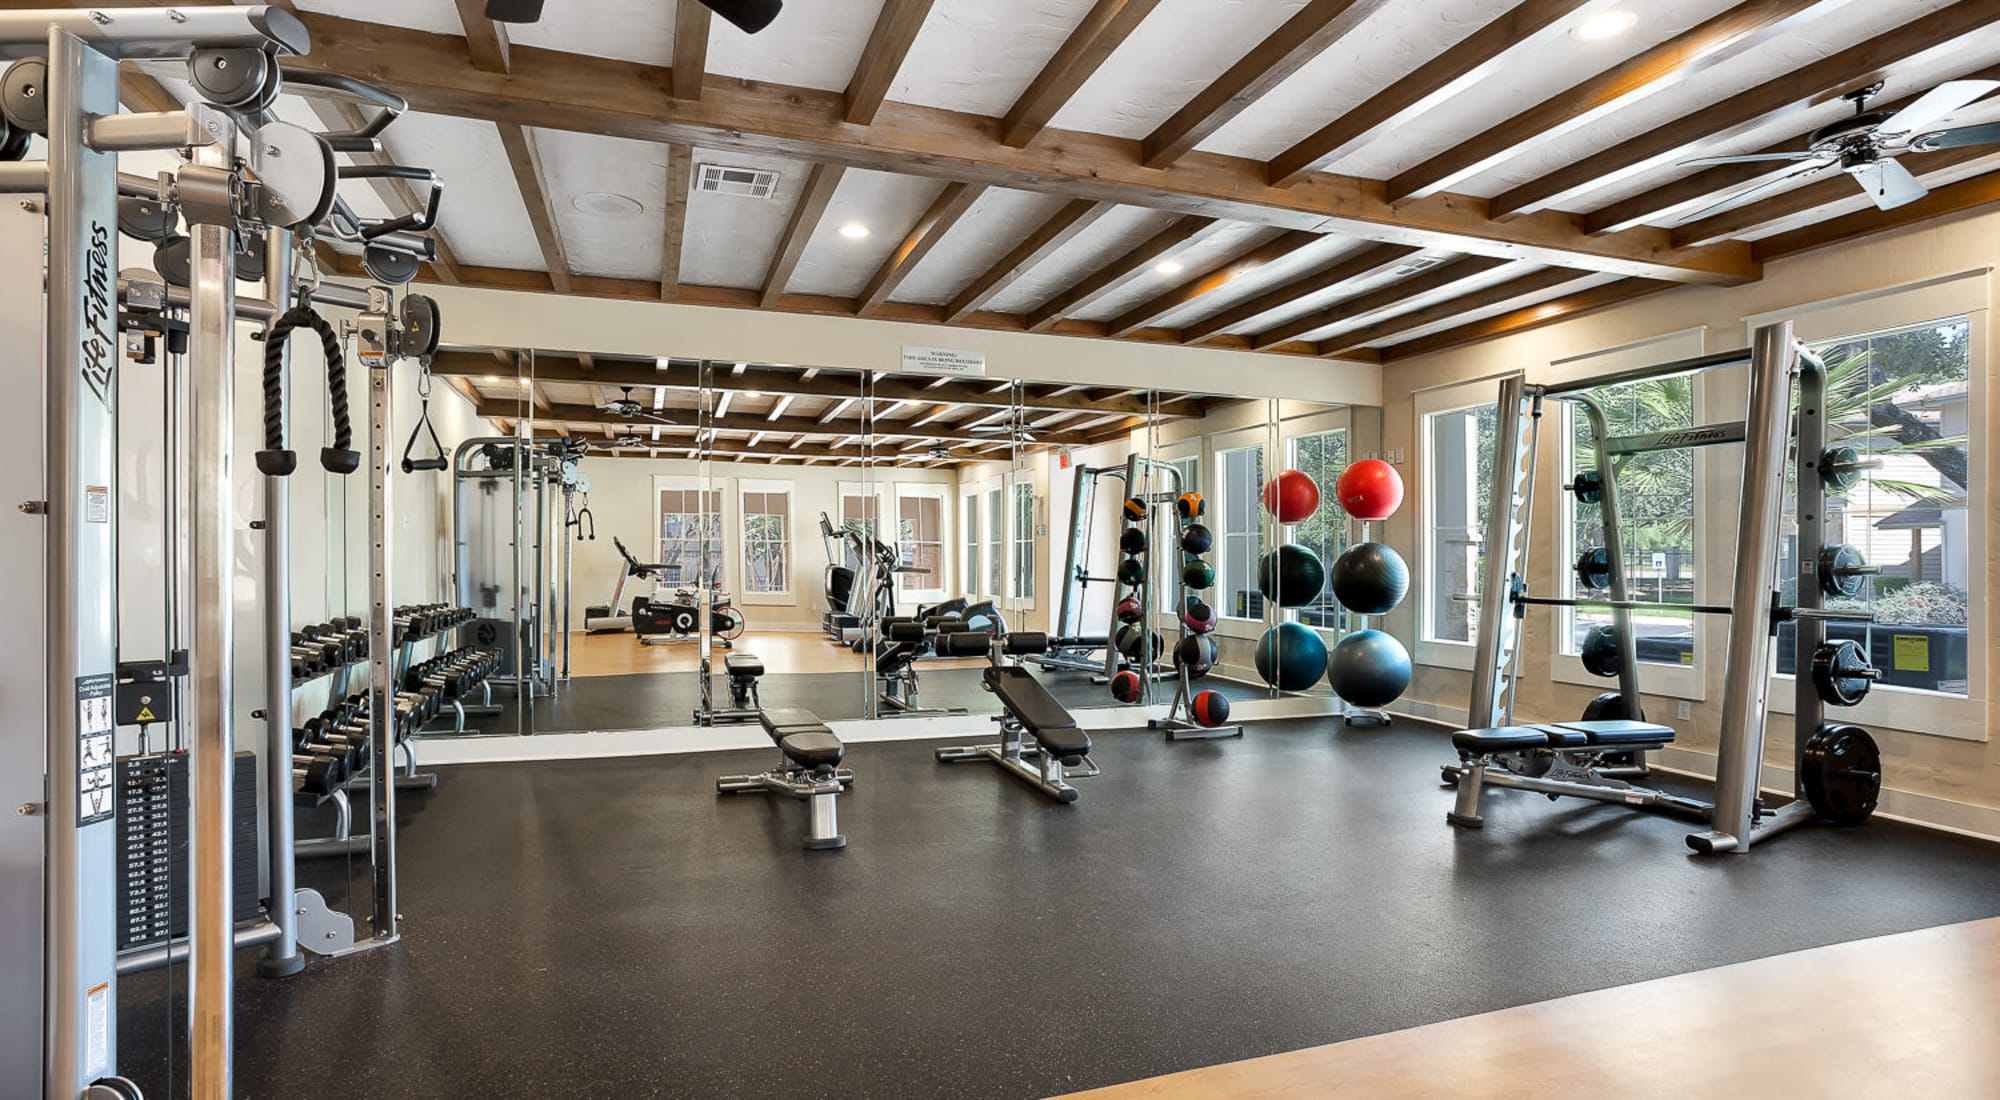 Fitness center at Sedona Ranch Apartments in San Antonio, Texas